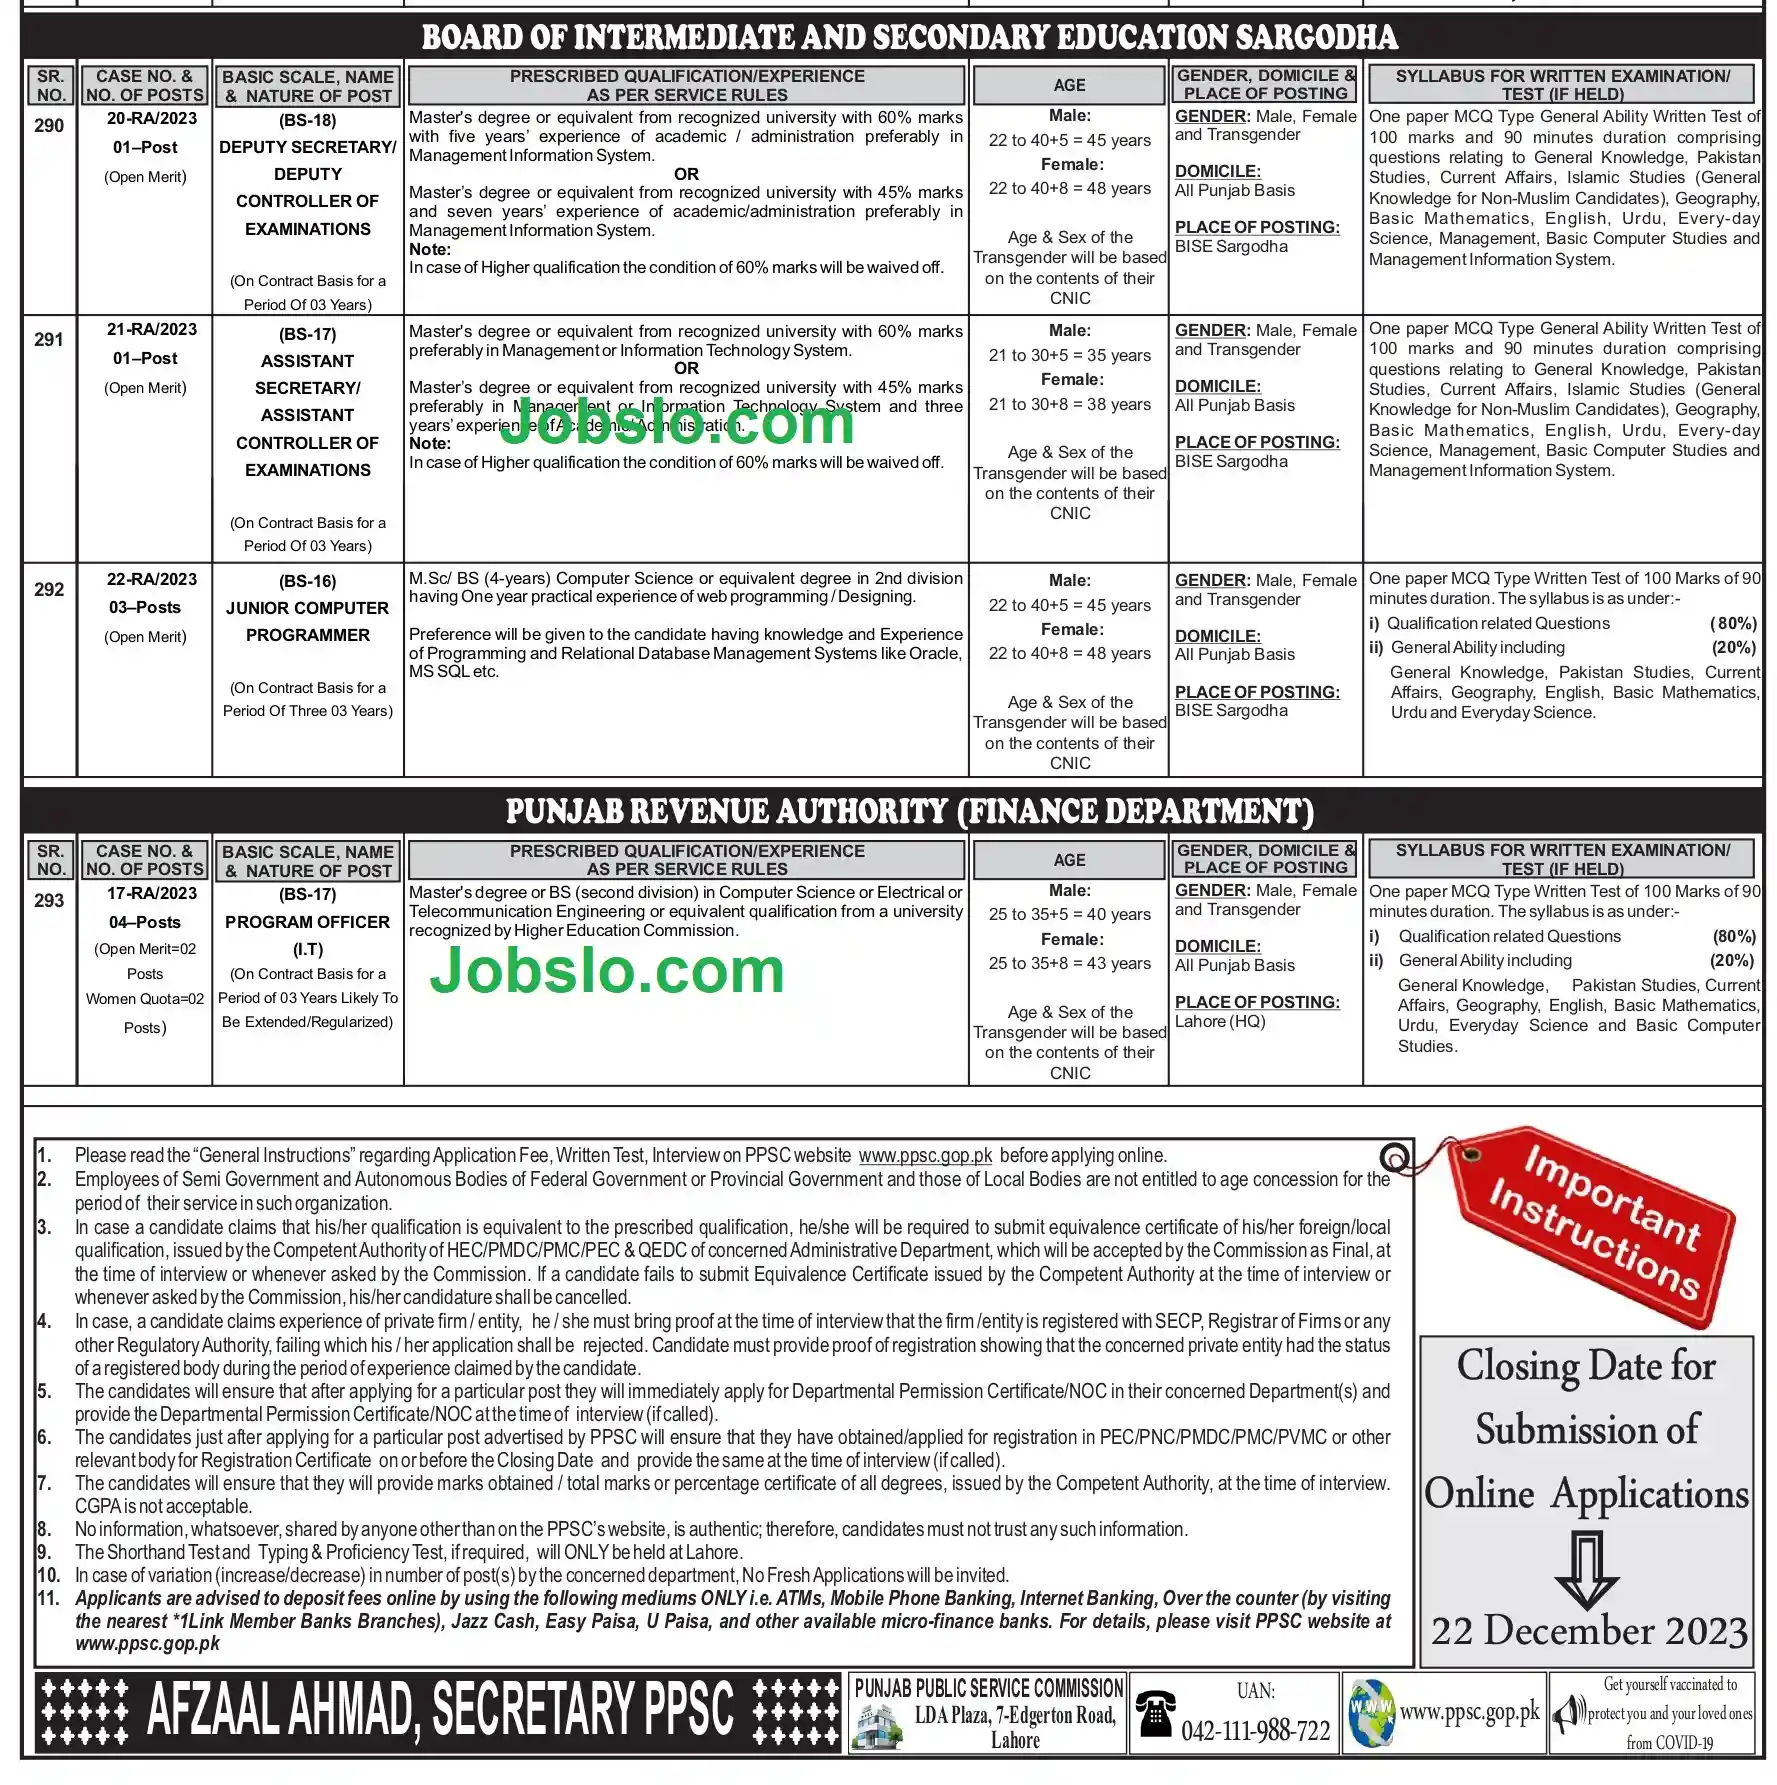 BISE Sargodha Jobs 2023 - Apply Online Advertisement